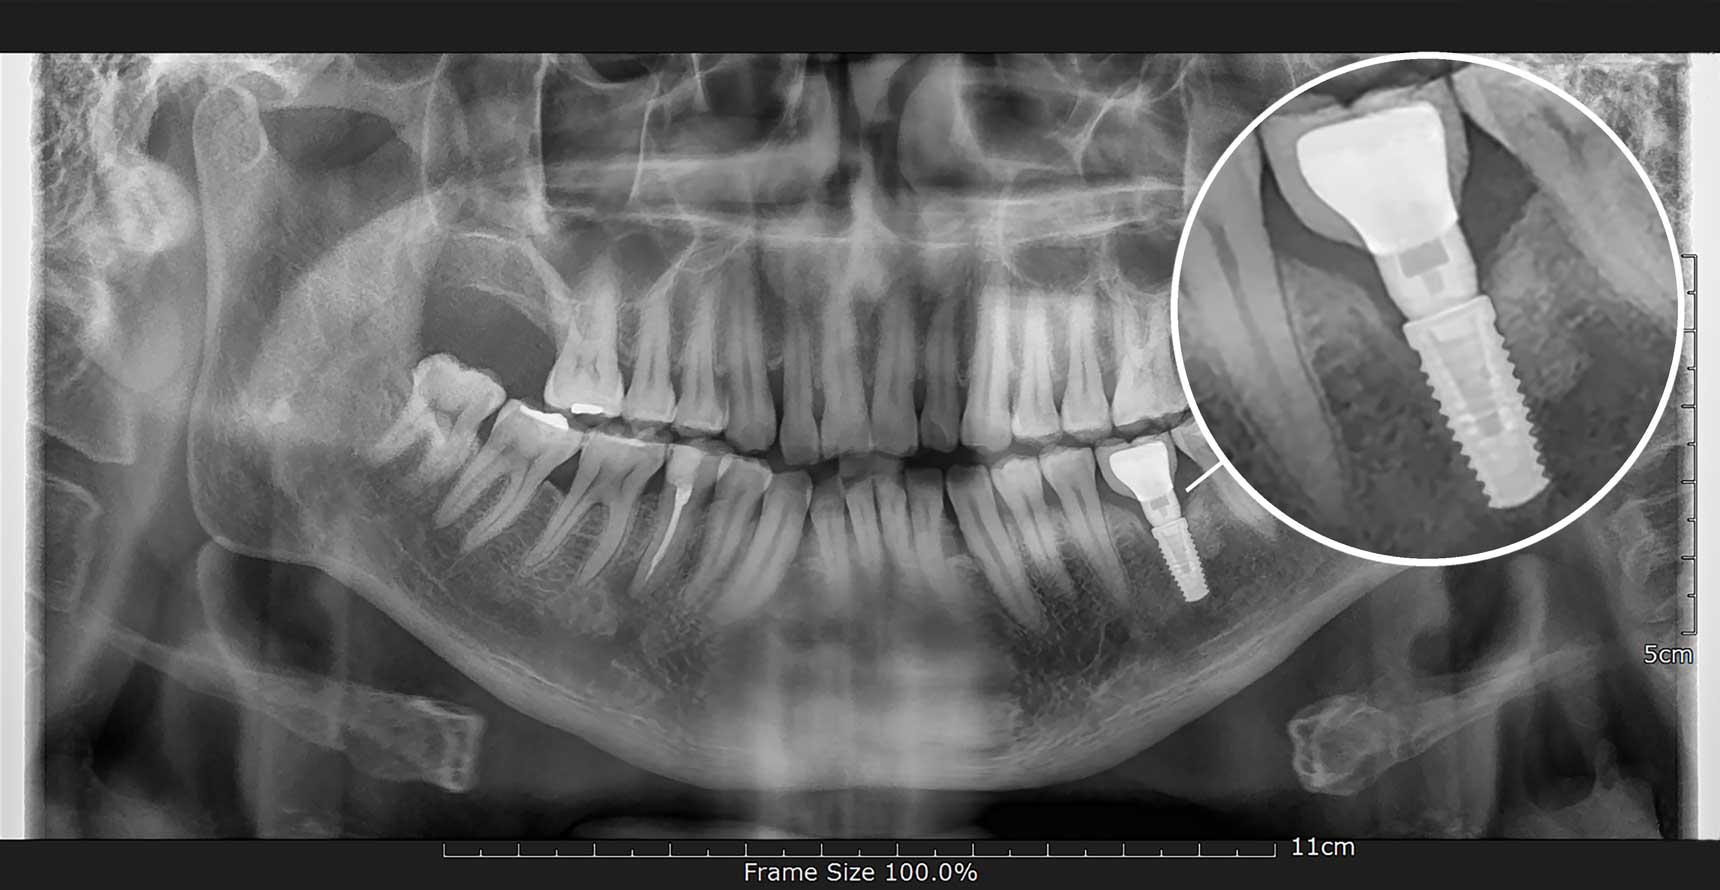 dental x-rays